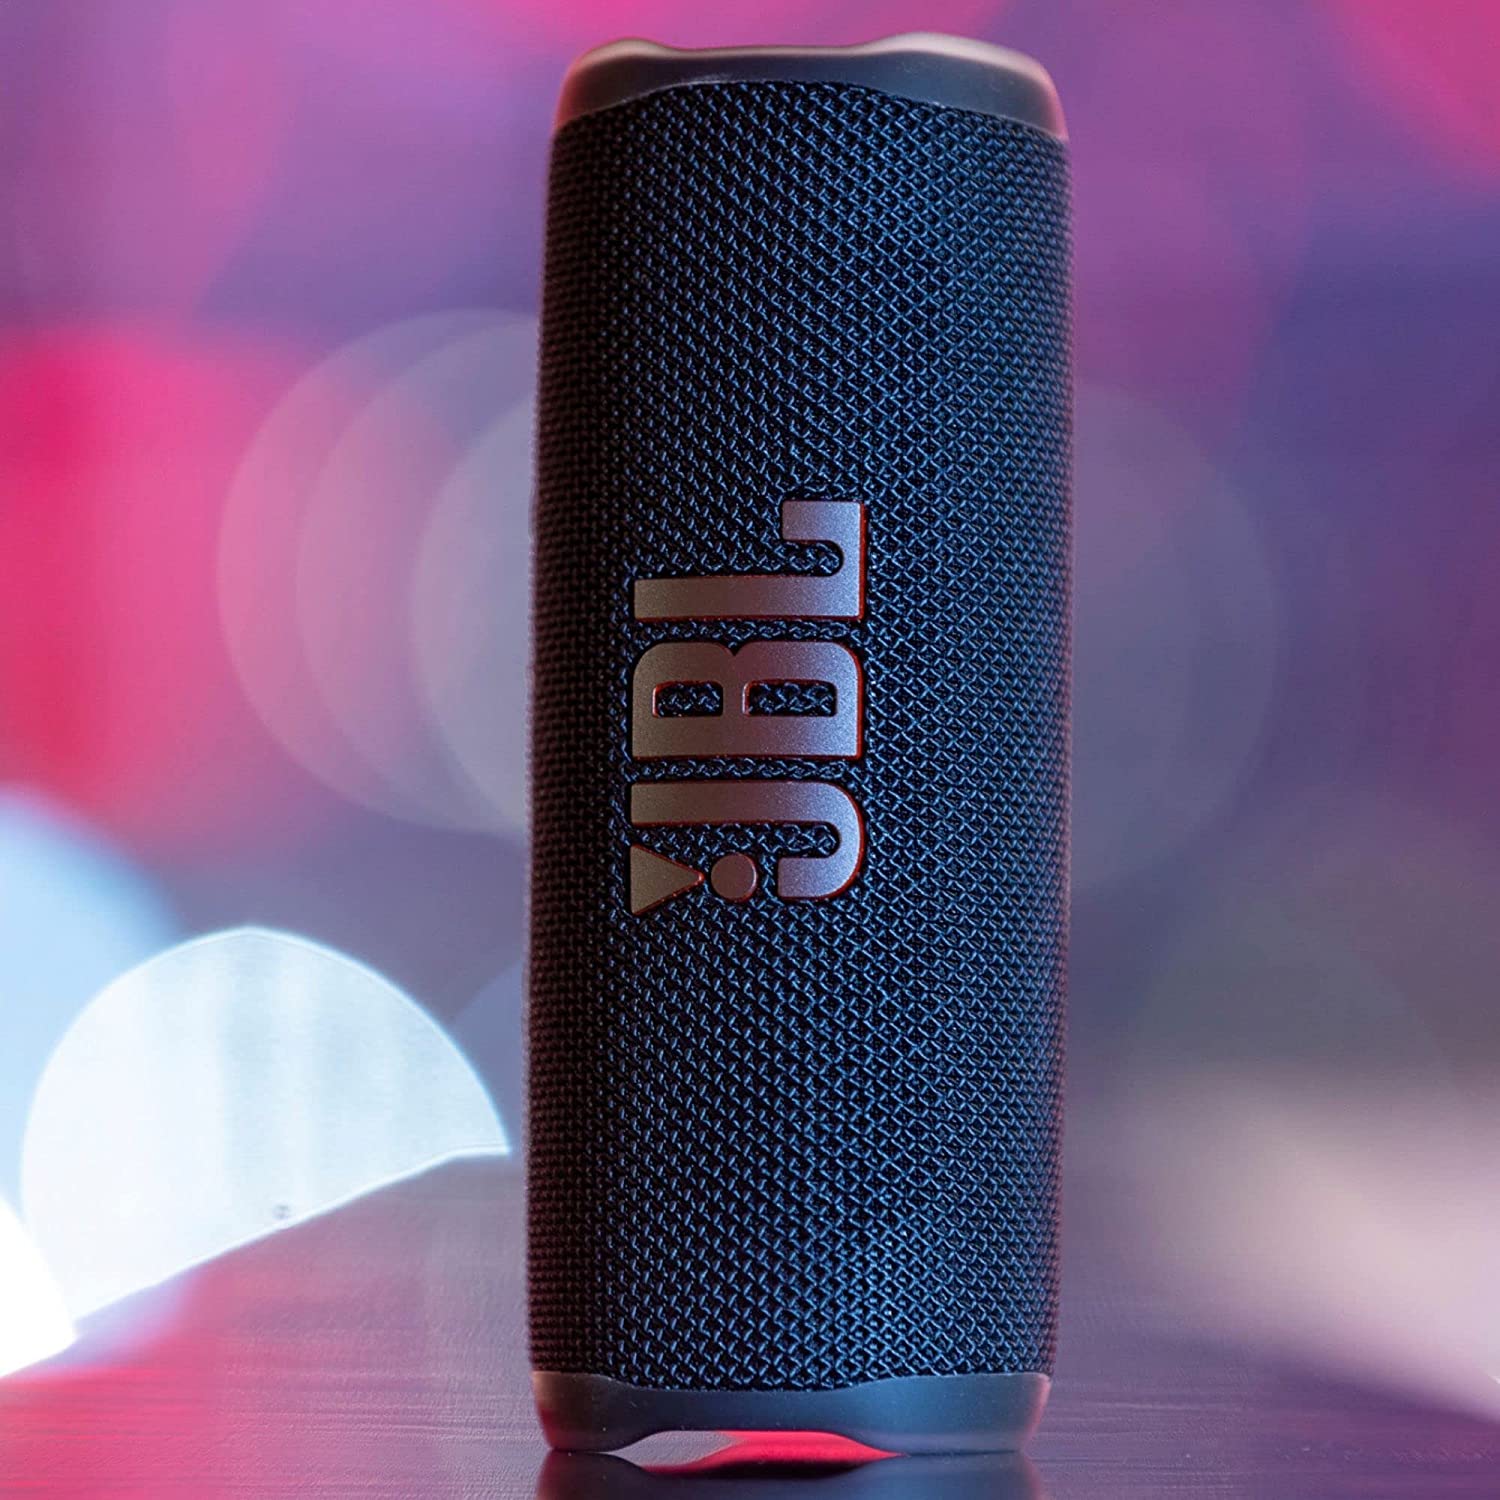 JBL Flip 6 - Portable Bluetooth Speaker - Blue